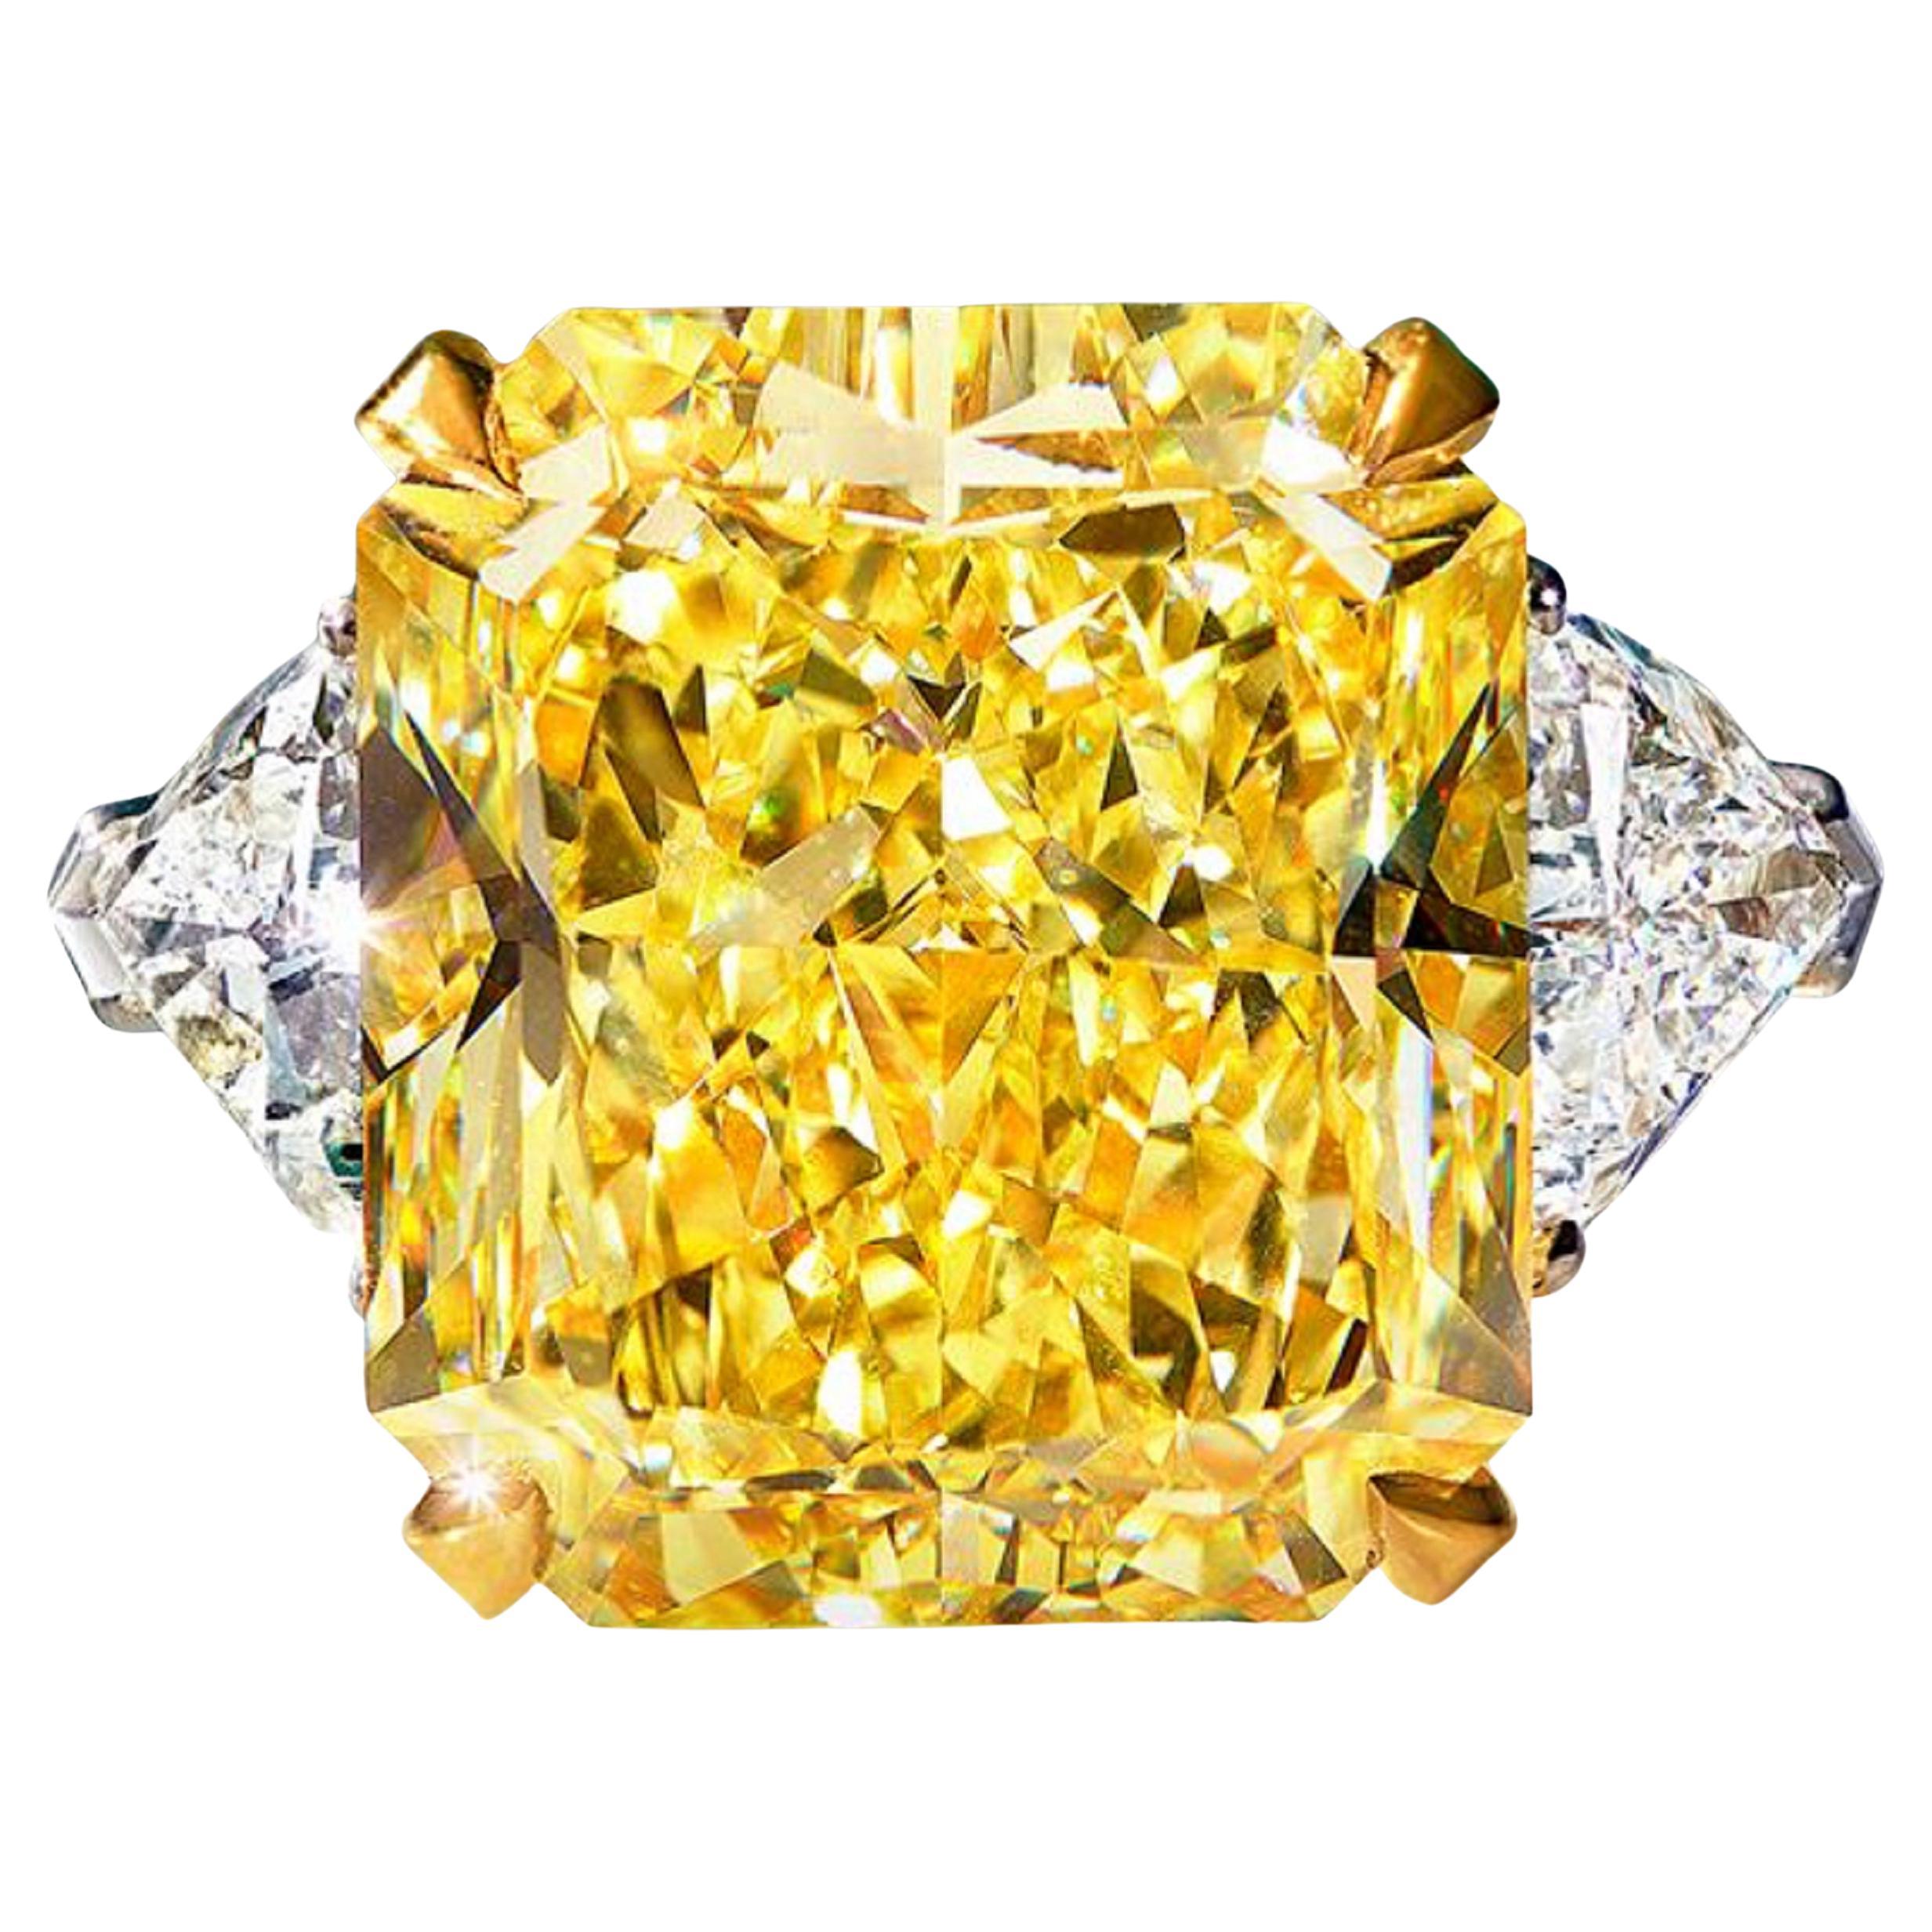 GIA Certified 19 Carat Fancy Intense Yellow Internally Flawless Diamond Ring